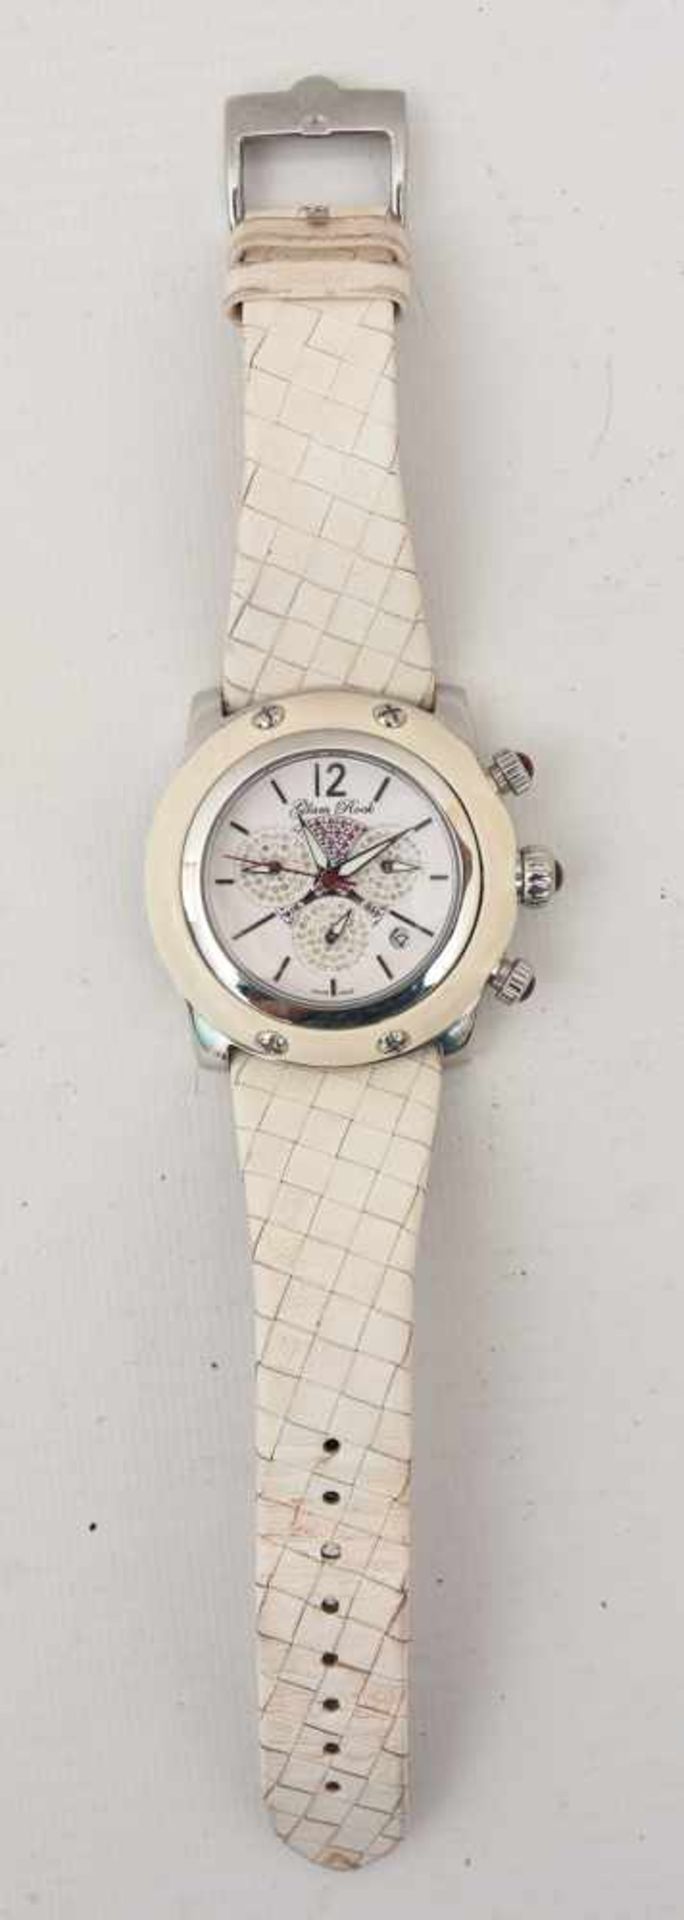 GLAM ROCK DAMENUHR WEISS, Edelstahl/Leder, um 2000 Quartz Damen-Armbanduhr "Glam Rock". weißes